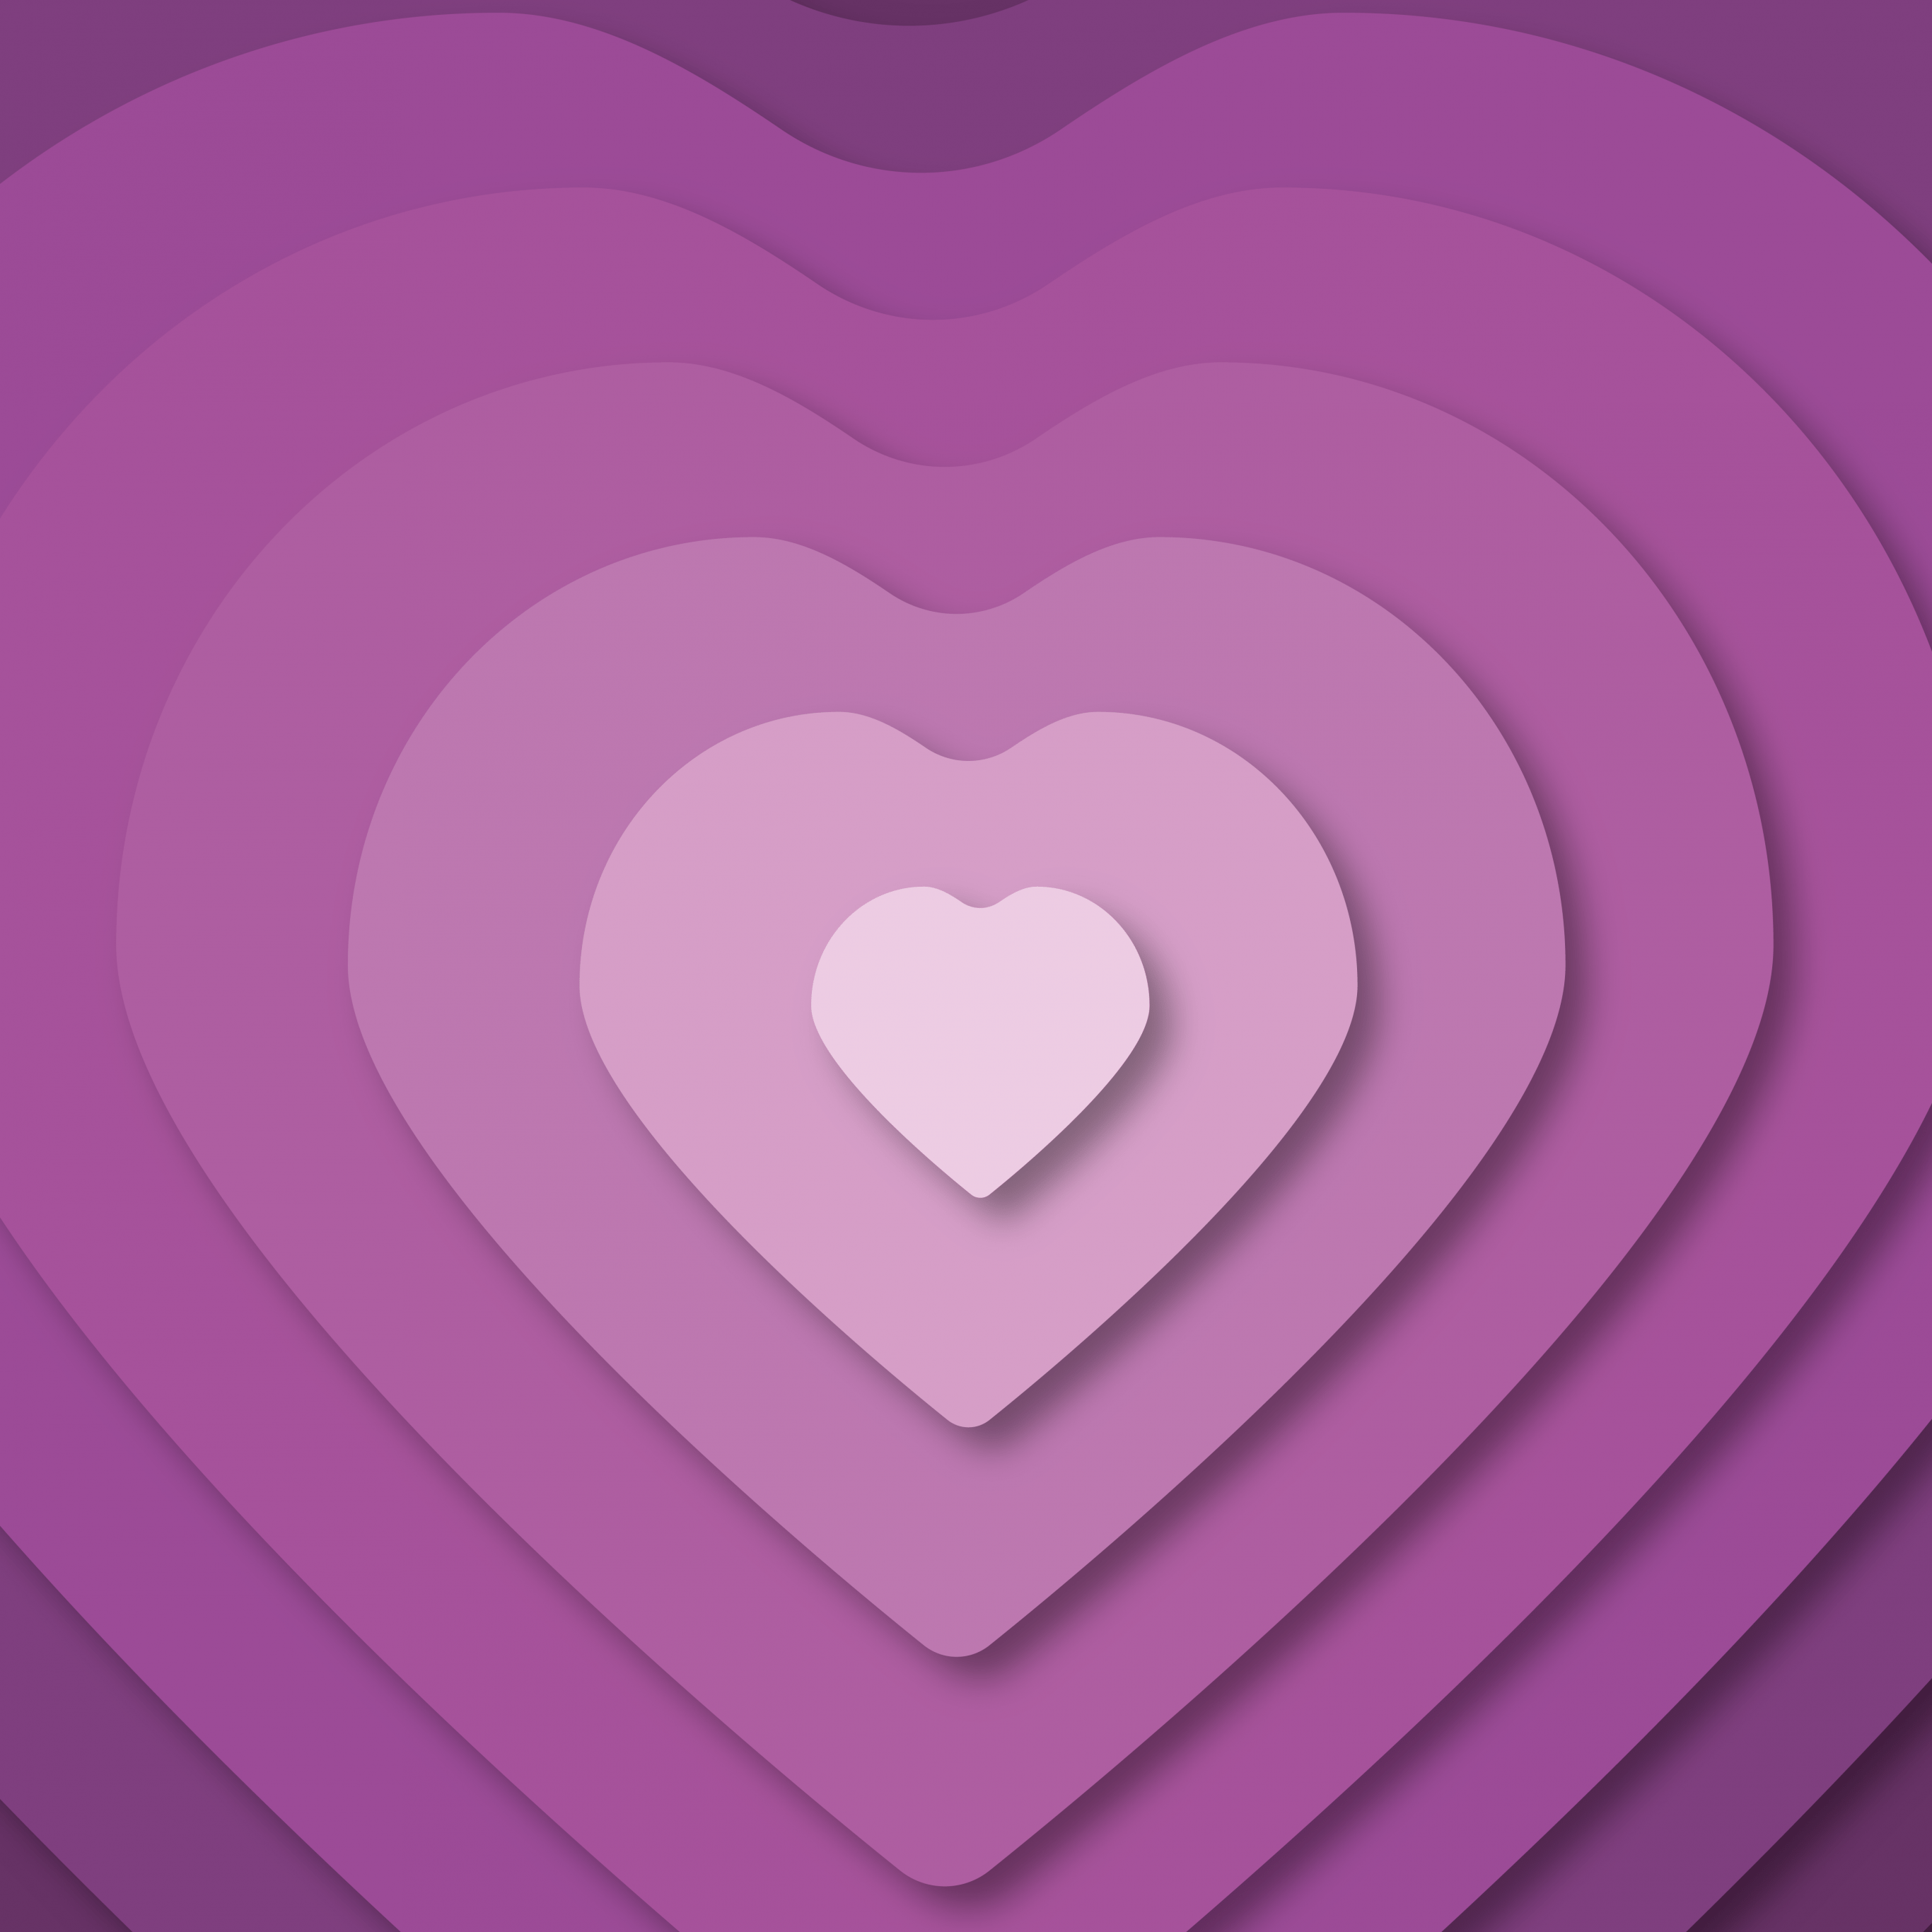 Love hearts Wallpaper 4K, Heart Background